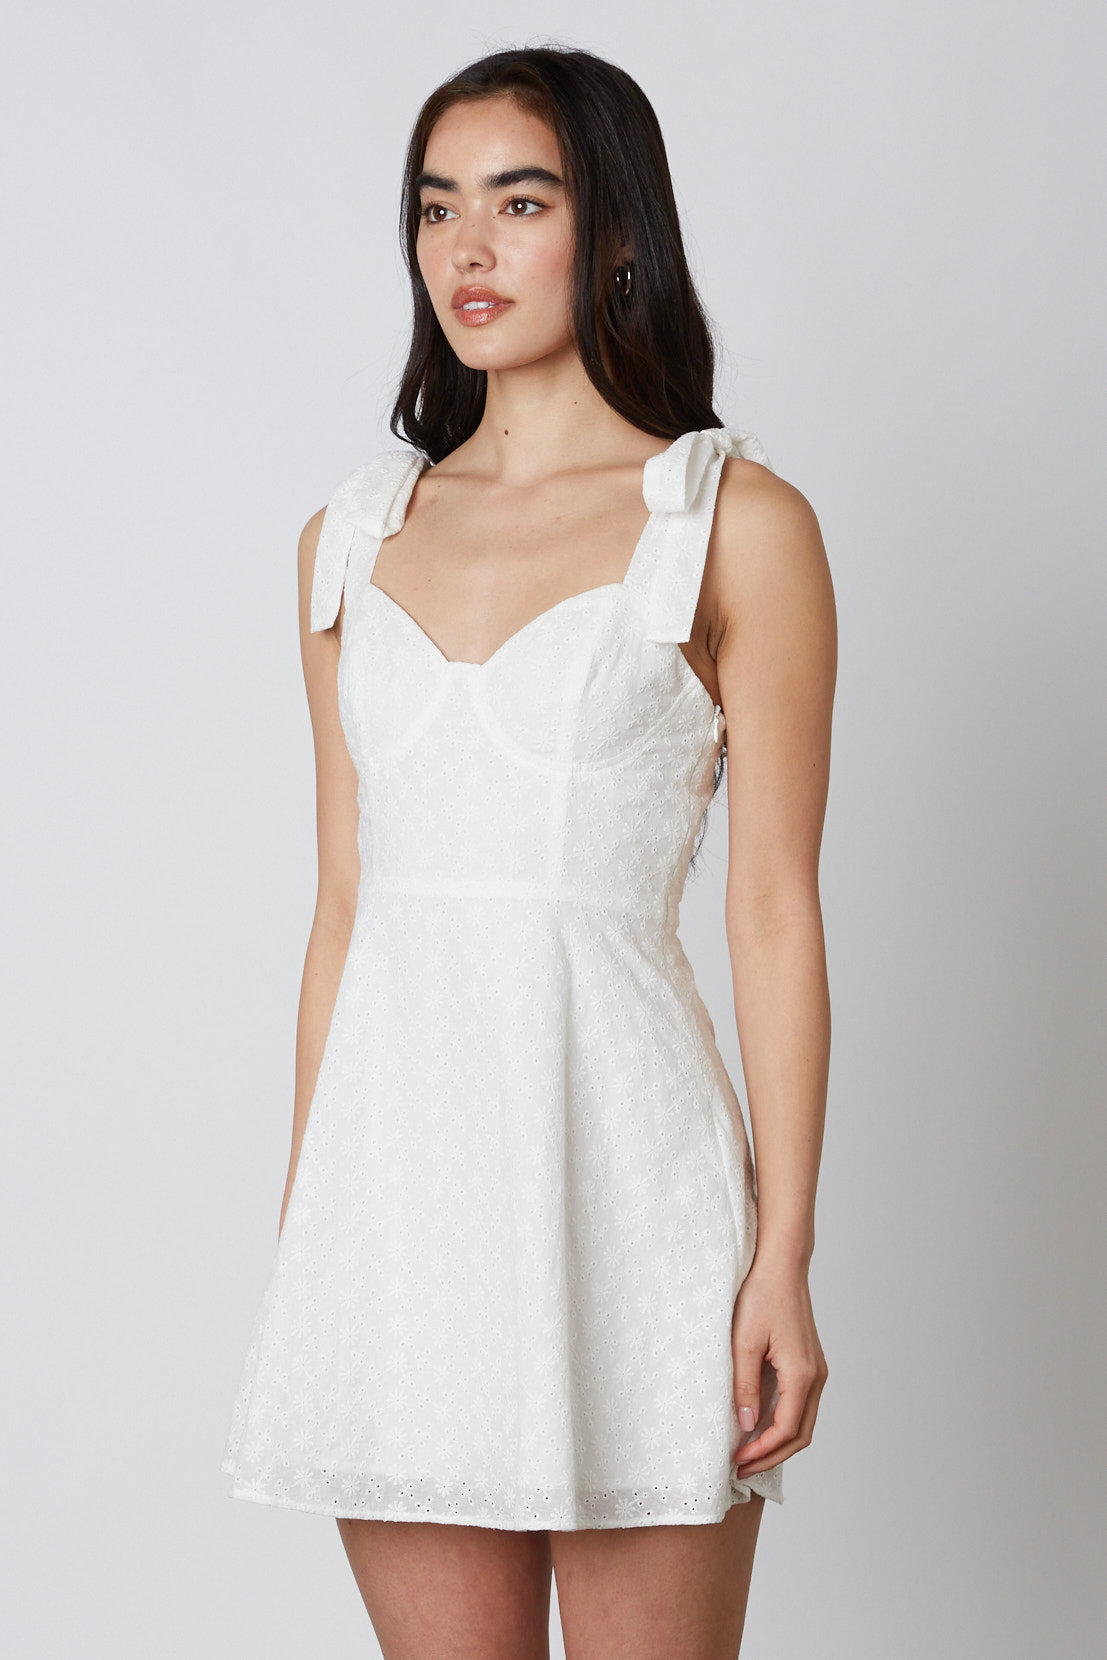 Eyelet Mini Dress in White Side View